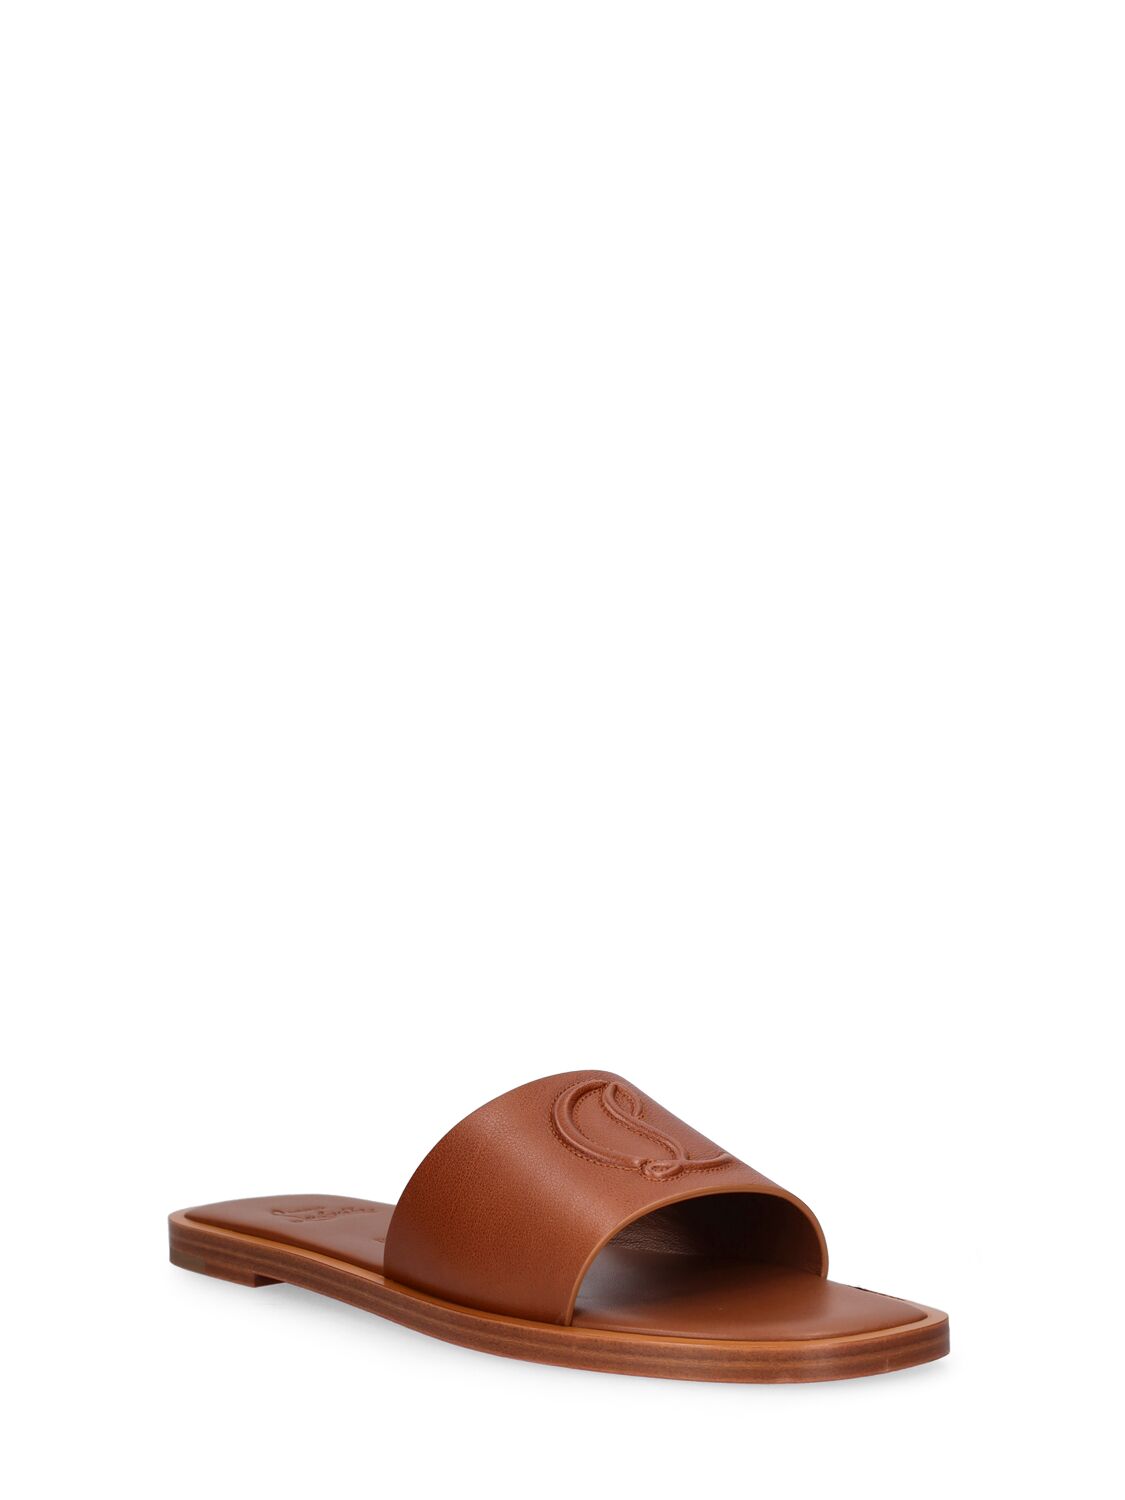 Shop Christian Louboutin Suede Plain Logo Sandals by Amery Shop